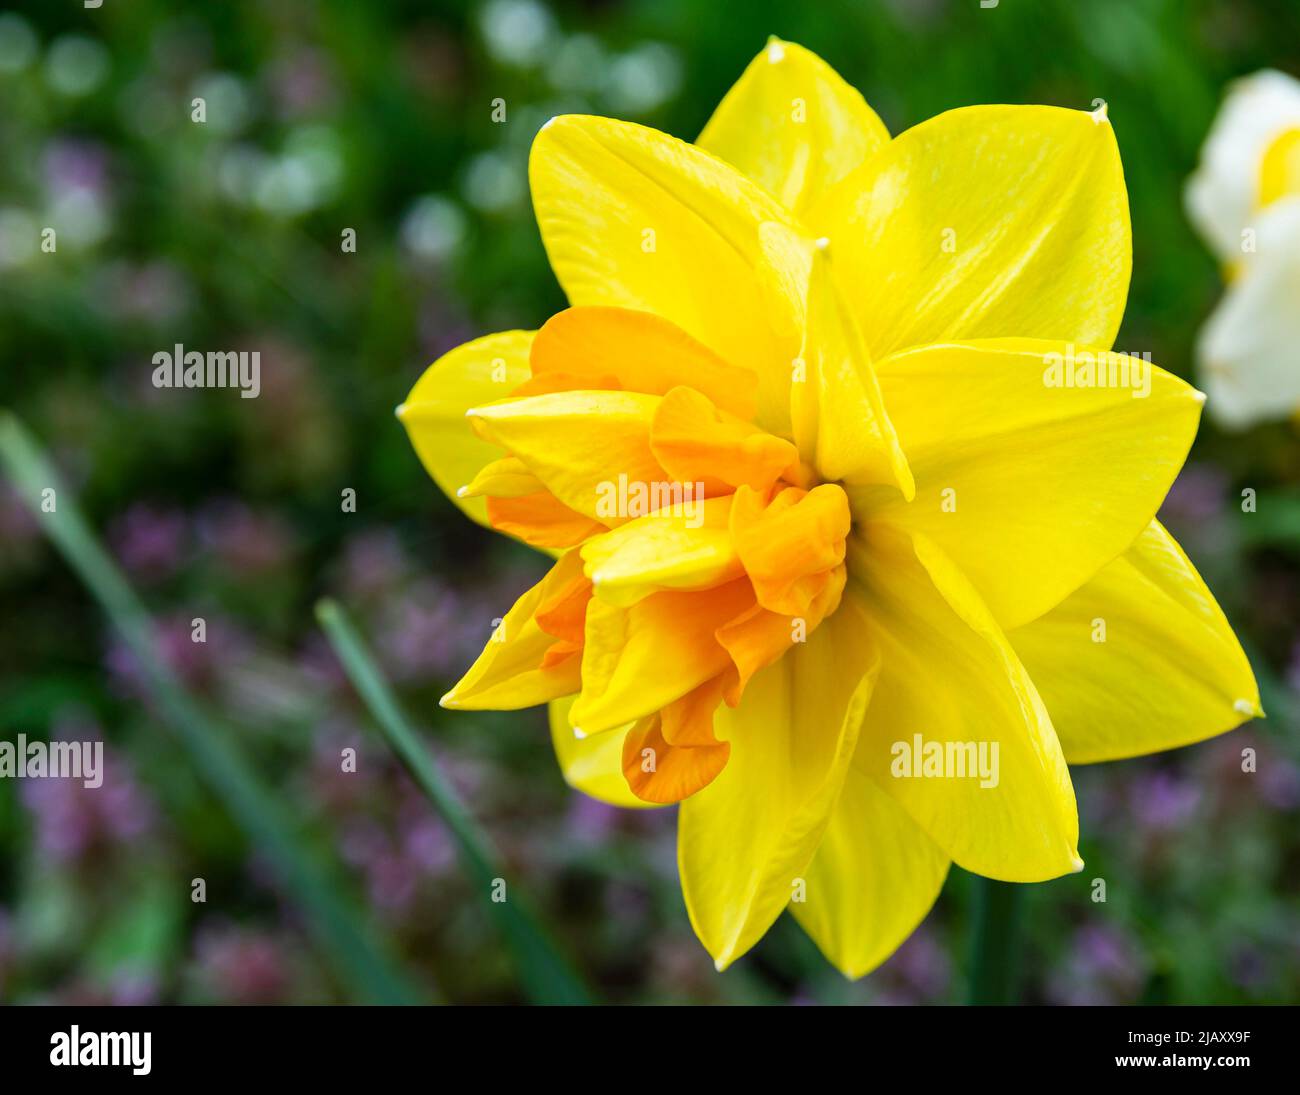 Narcissus bicolore décoratif floral (Narcissus latin) Banque D'Images